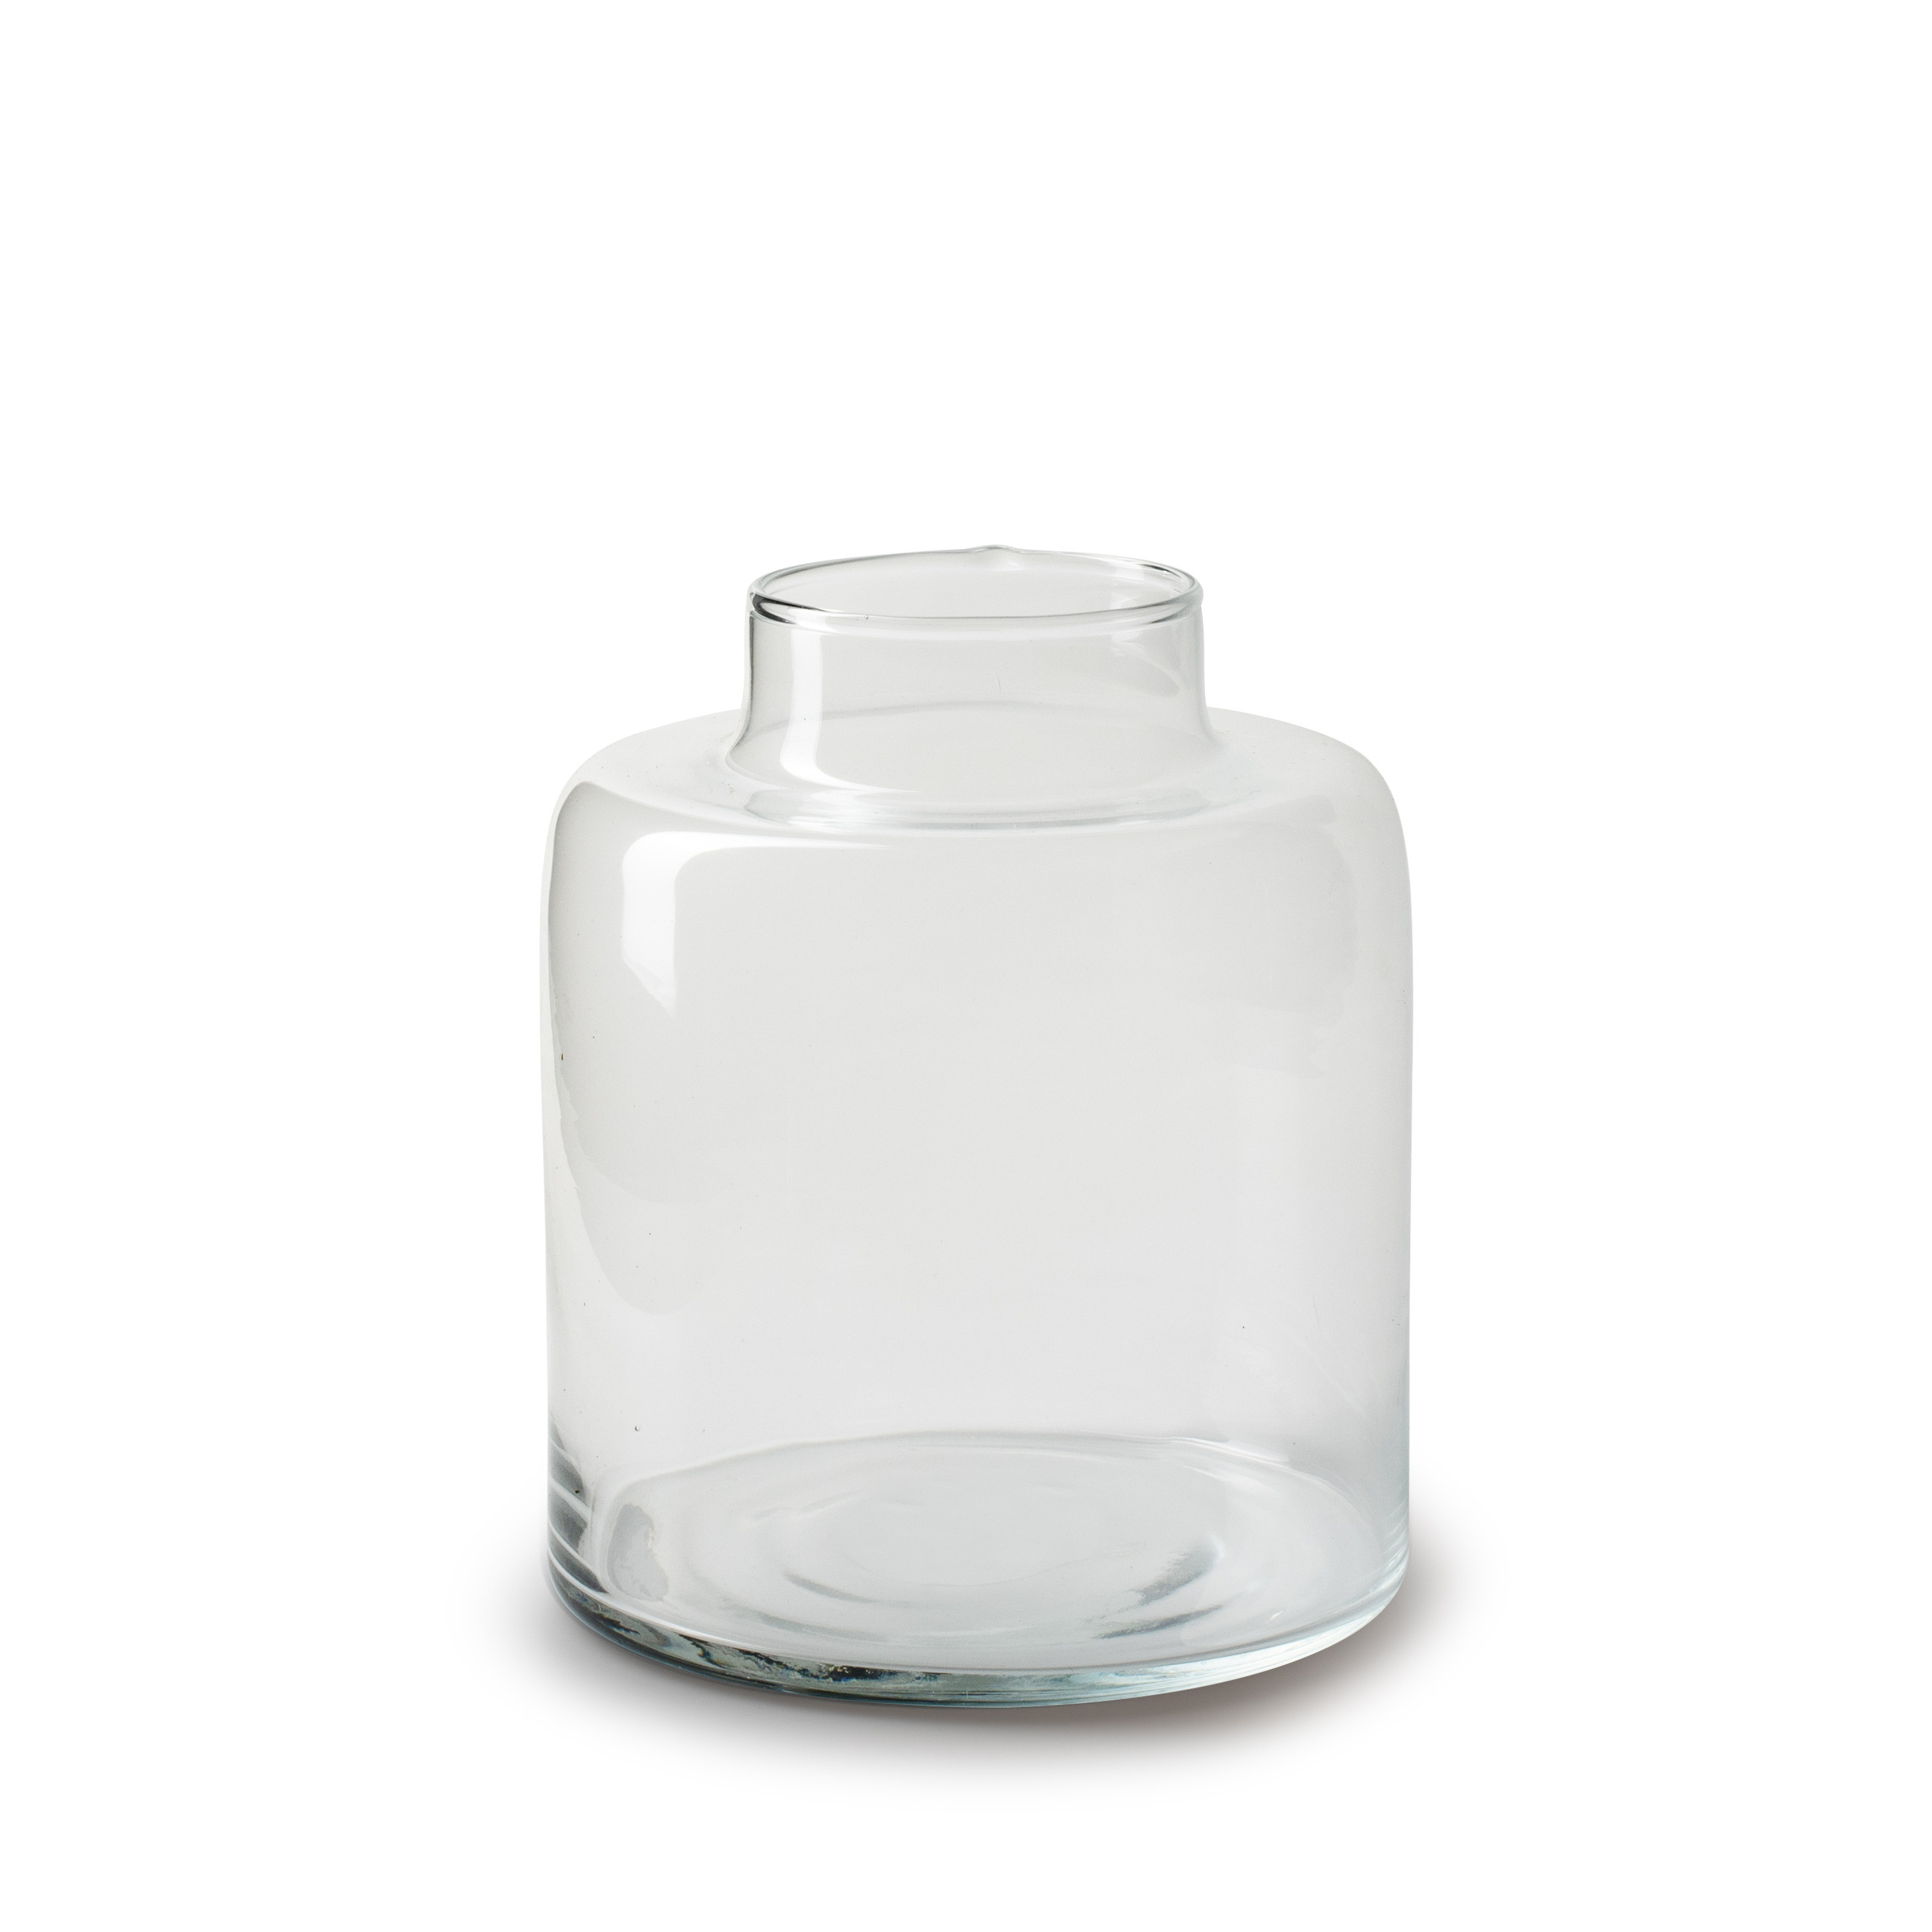 Jodeco Bloemenvaas Willem - helder transparant - glas - D19 x H17 cm - fles vorm vaas -